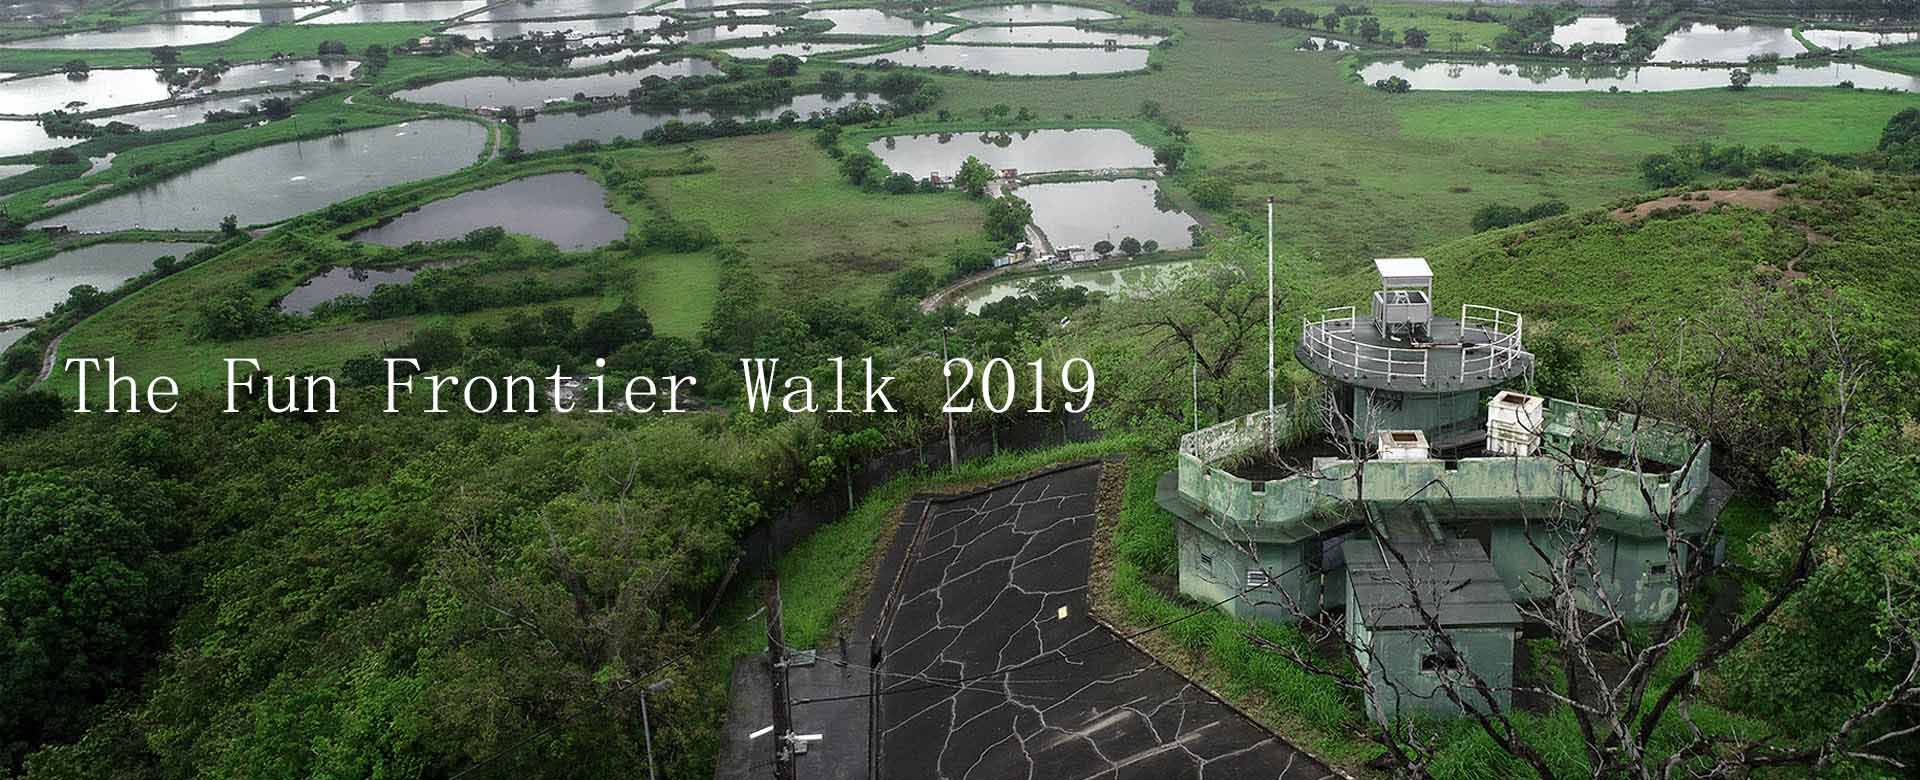 The Fun Frontier Walk 2019